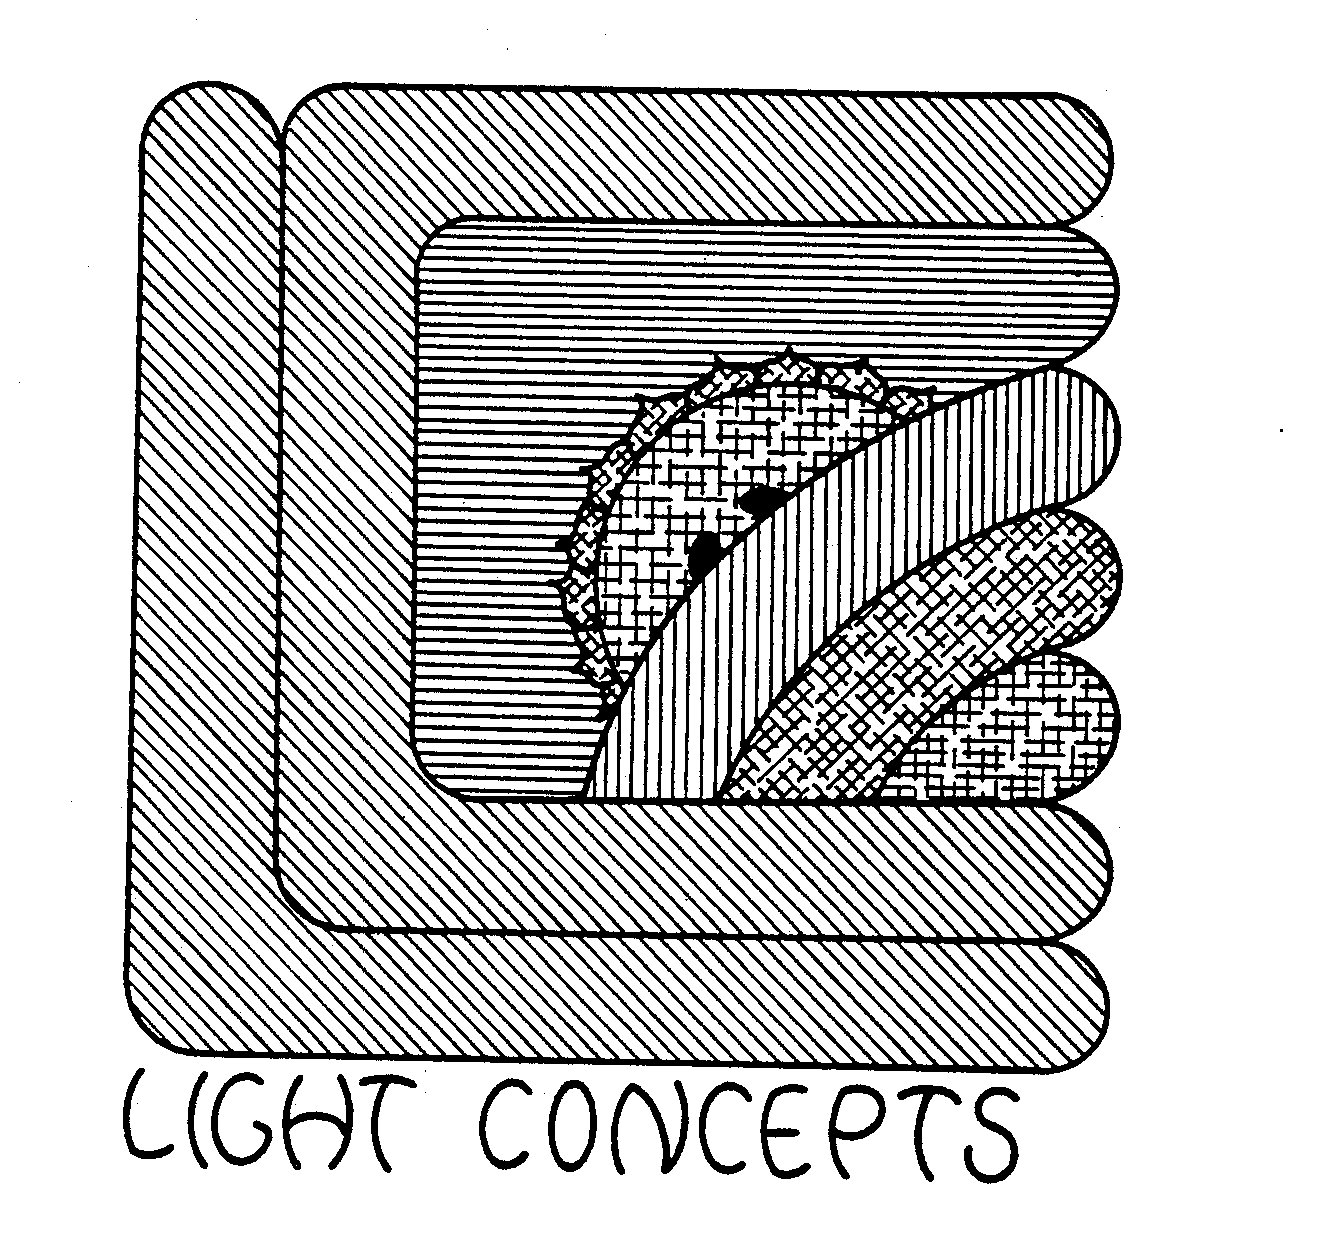 LIGHT CONCEPTS